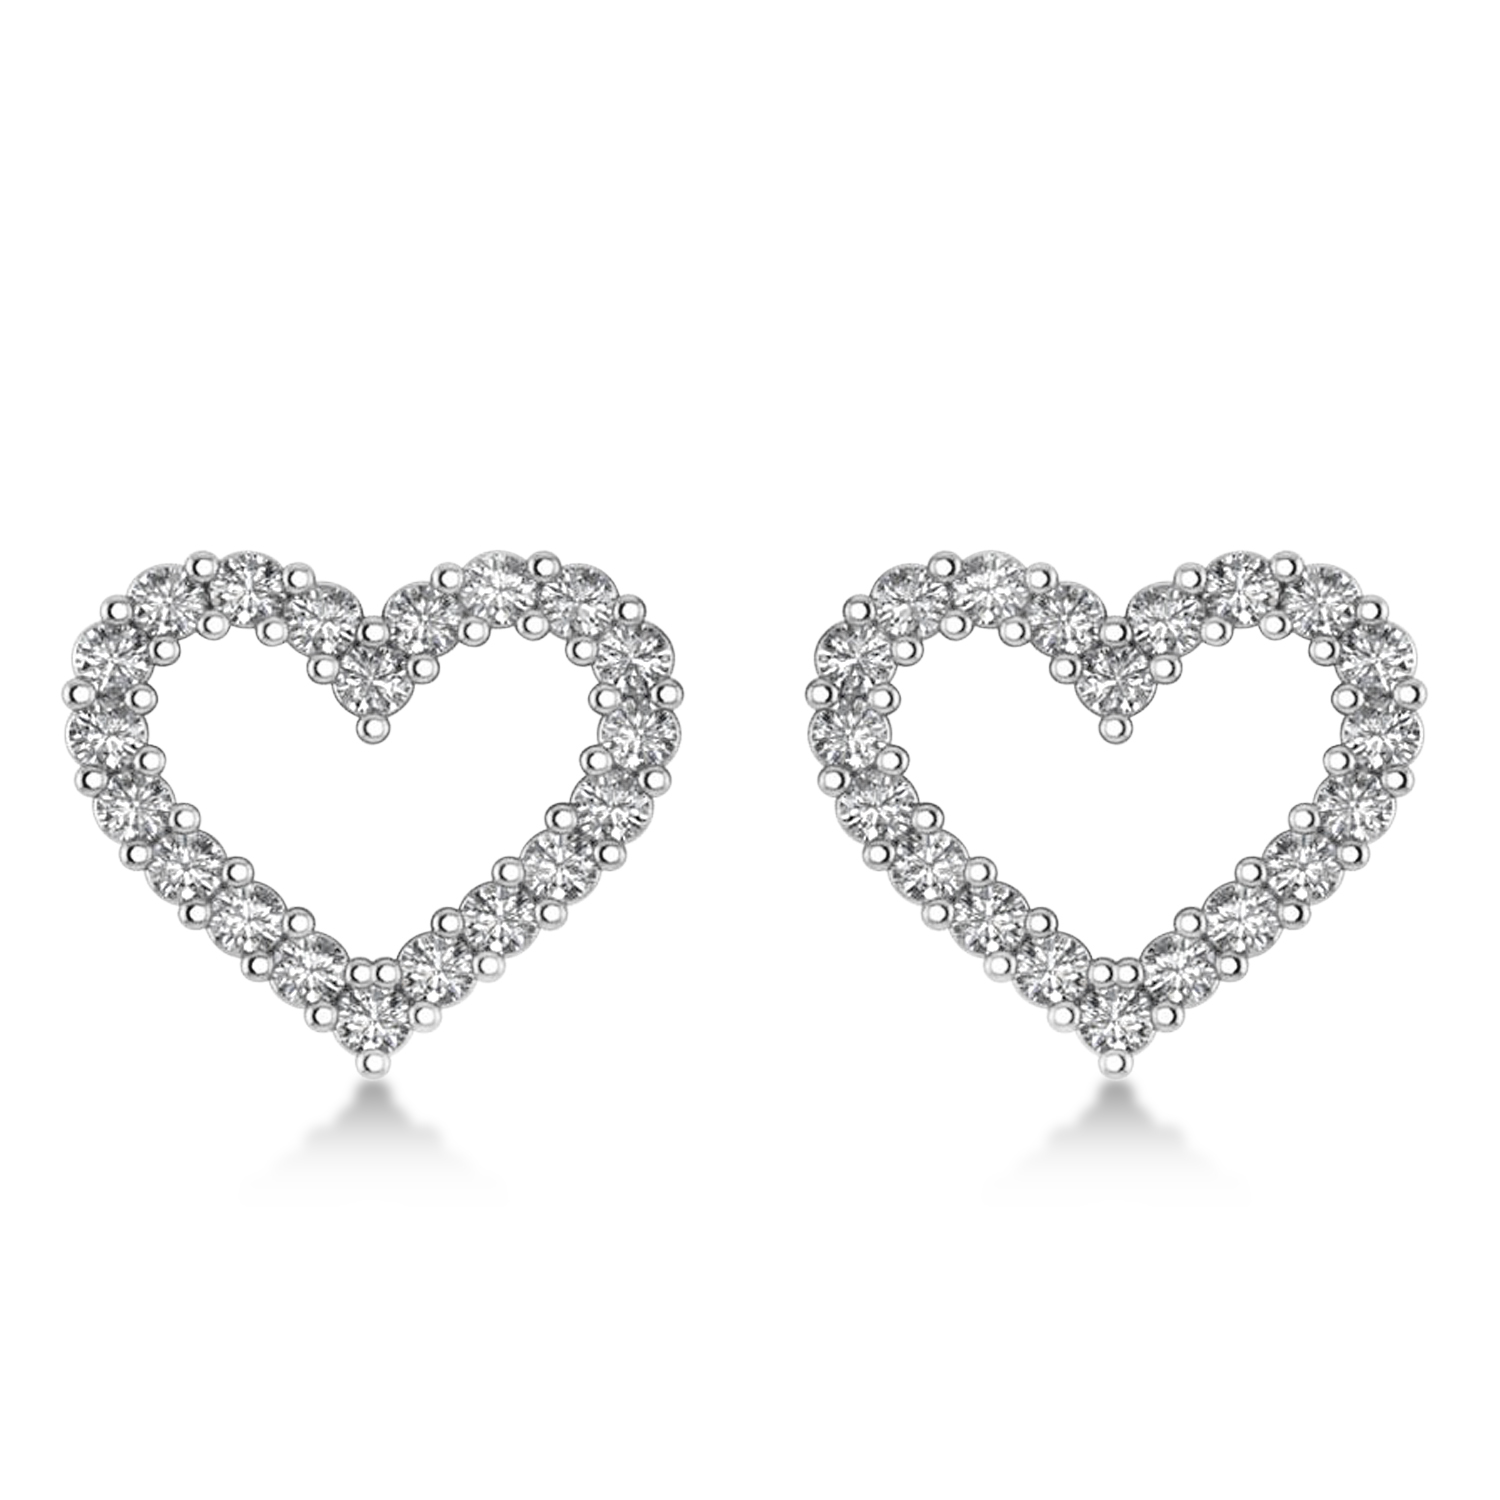 Heart-Shaped Jewelry in Honor of Valentine's Day | Allurez Jewelry Blog